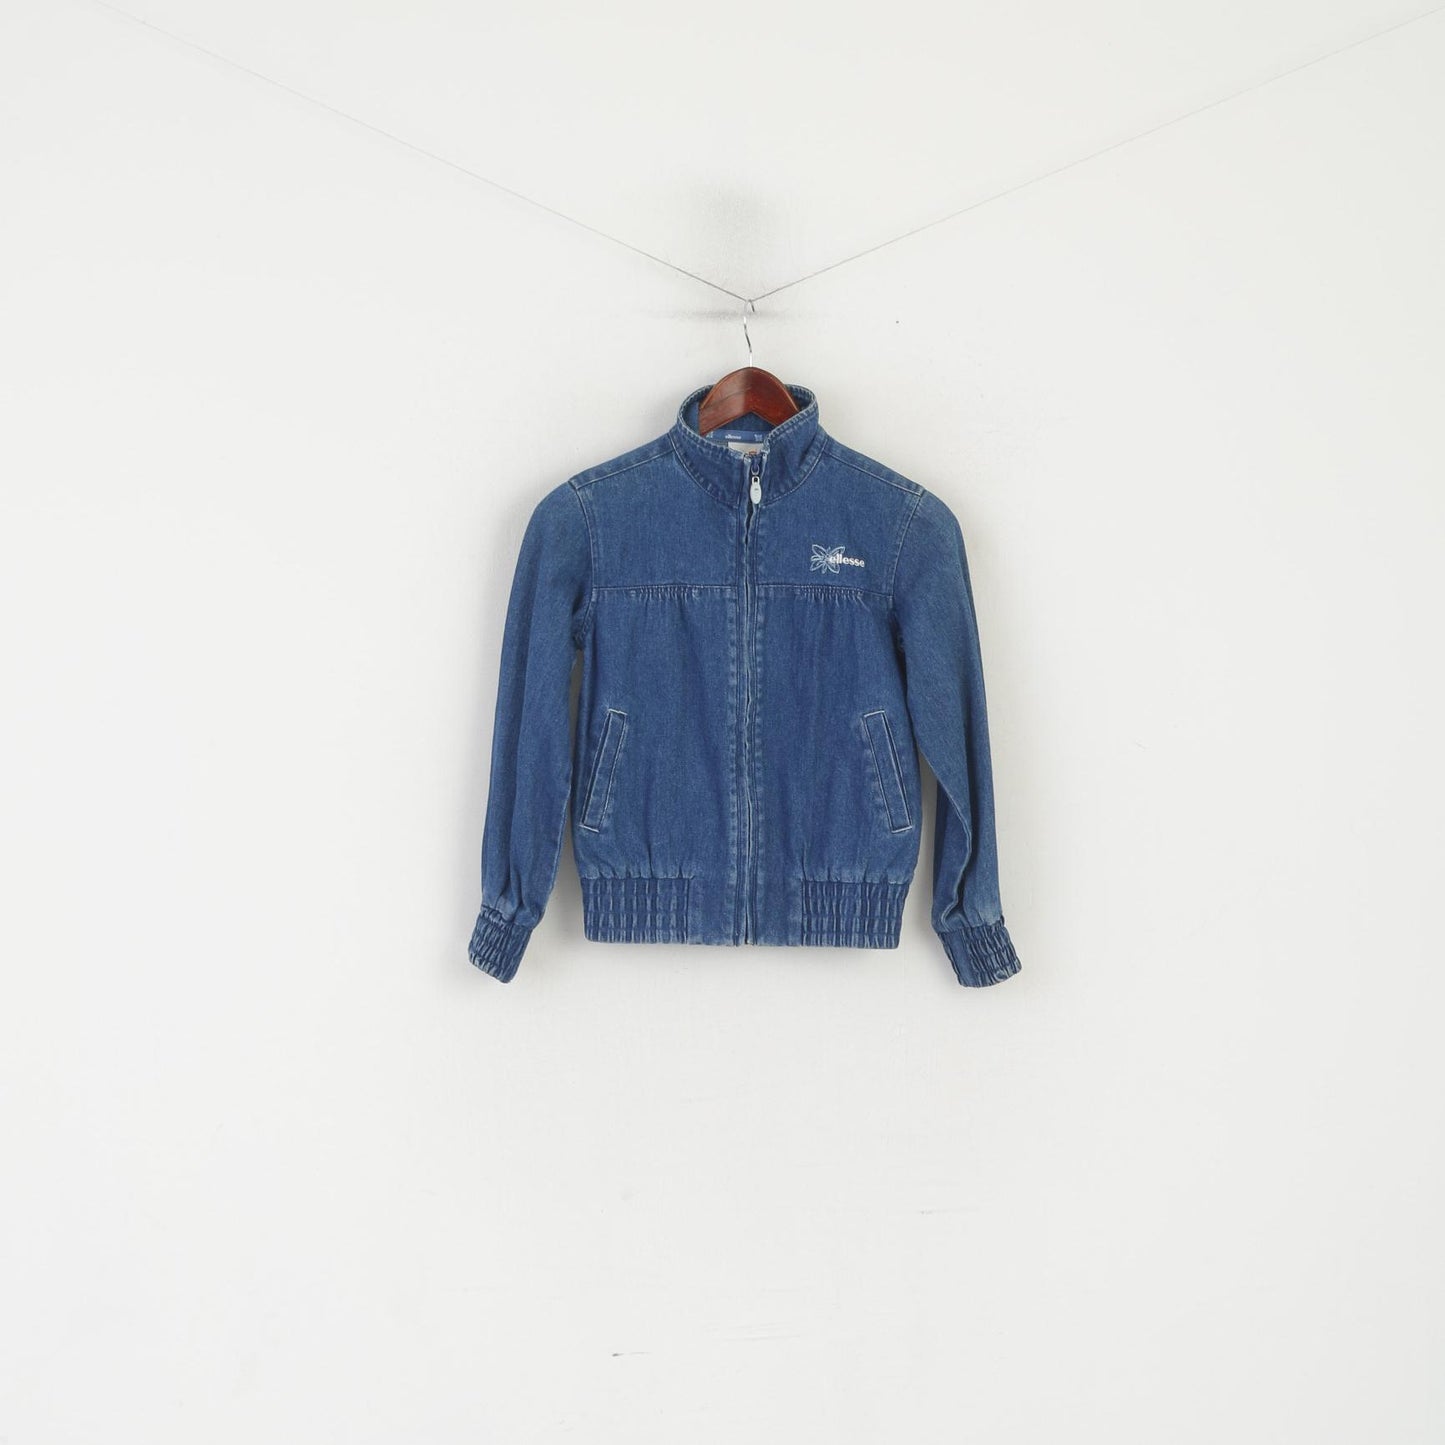 Nuova giacca di jeans Ellesse Grils JM 140-146 Top in cotone blu con cerniera intera